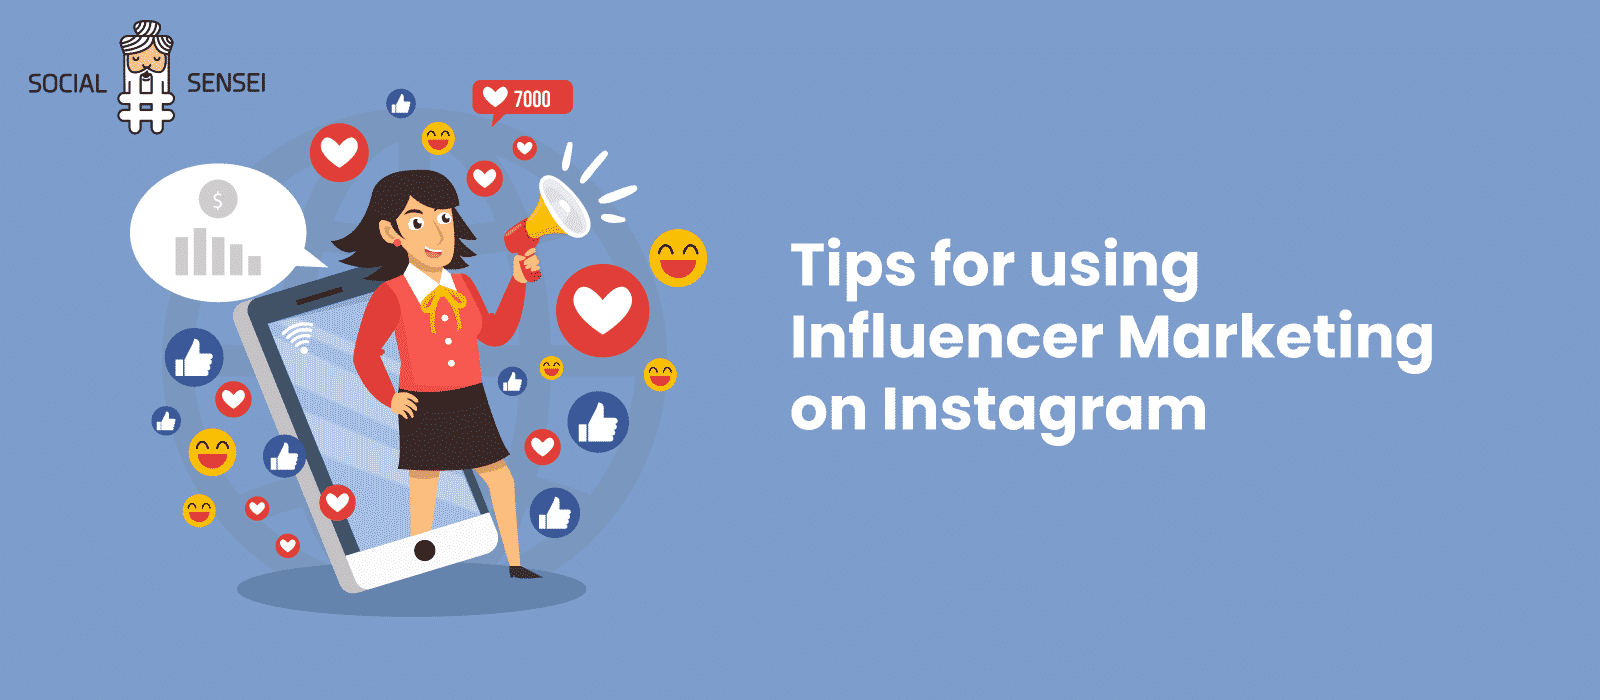 Tips for using influencer marketing on Instagram